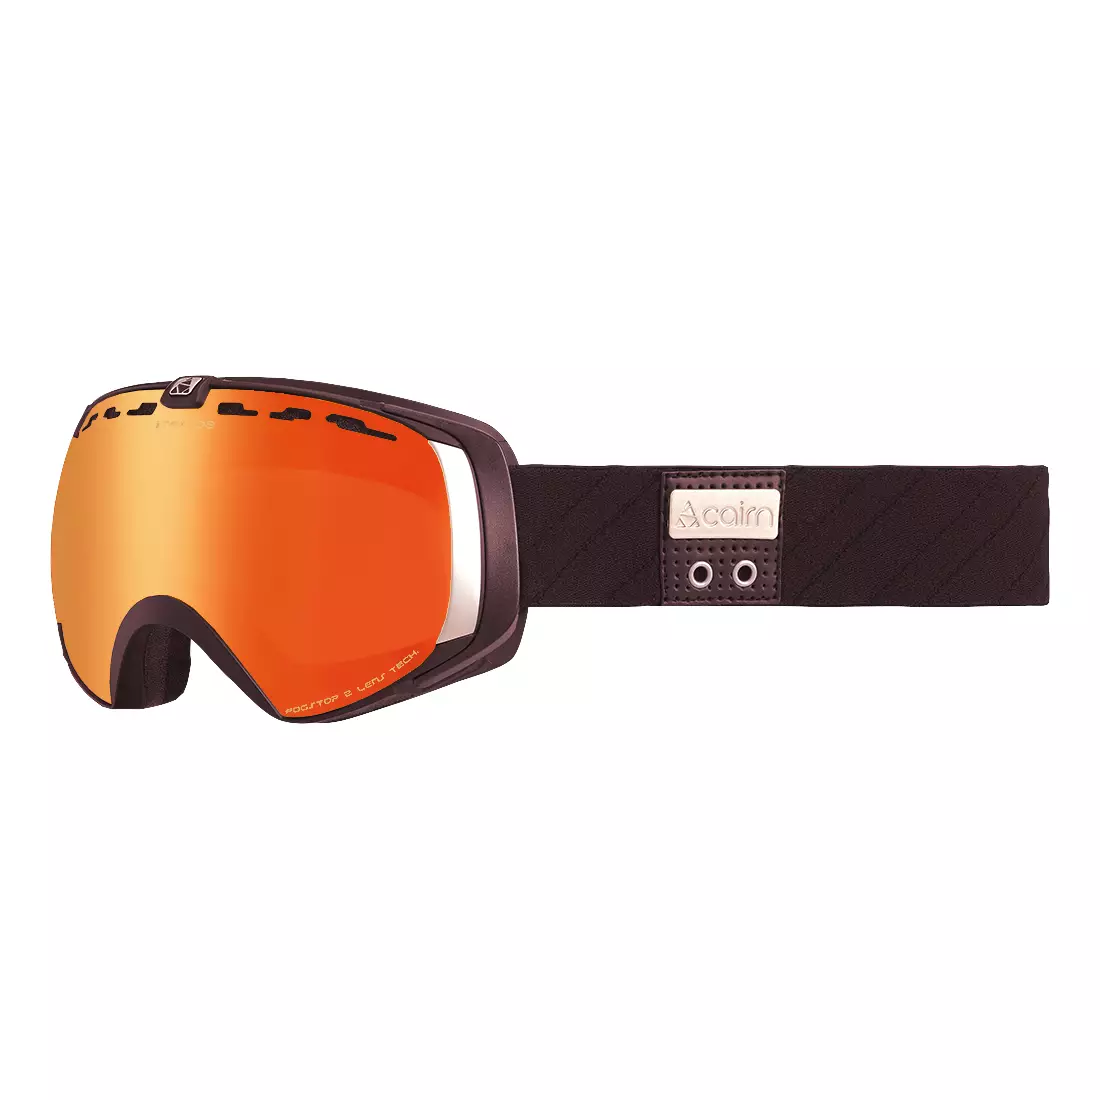 CAIRN STRATOS SPX3000 IUM bicycle goggles, orange